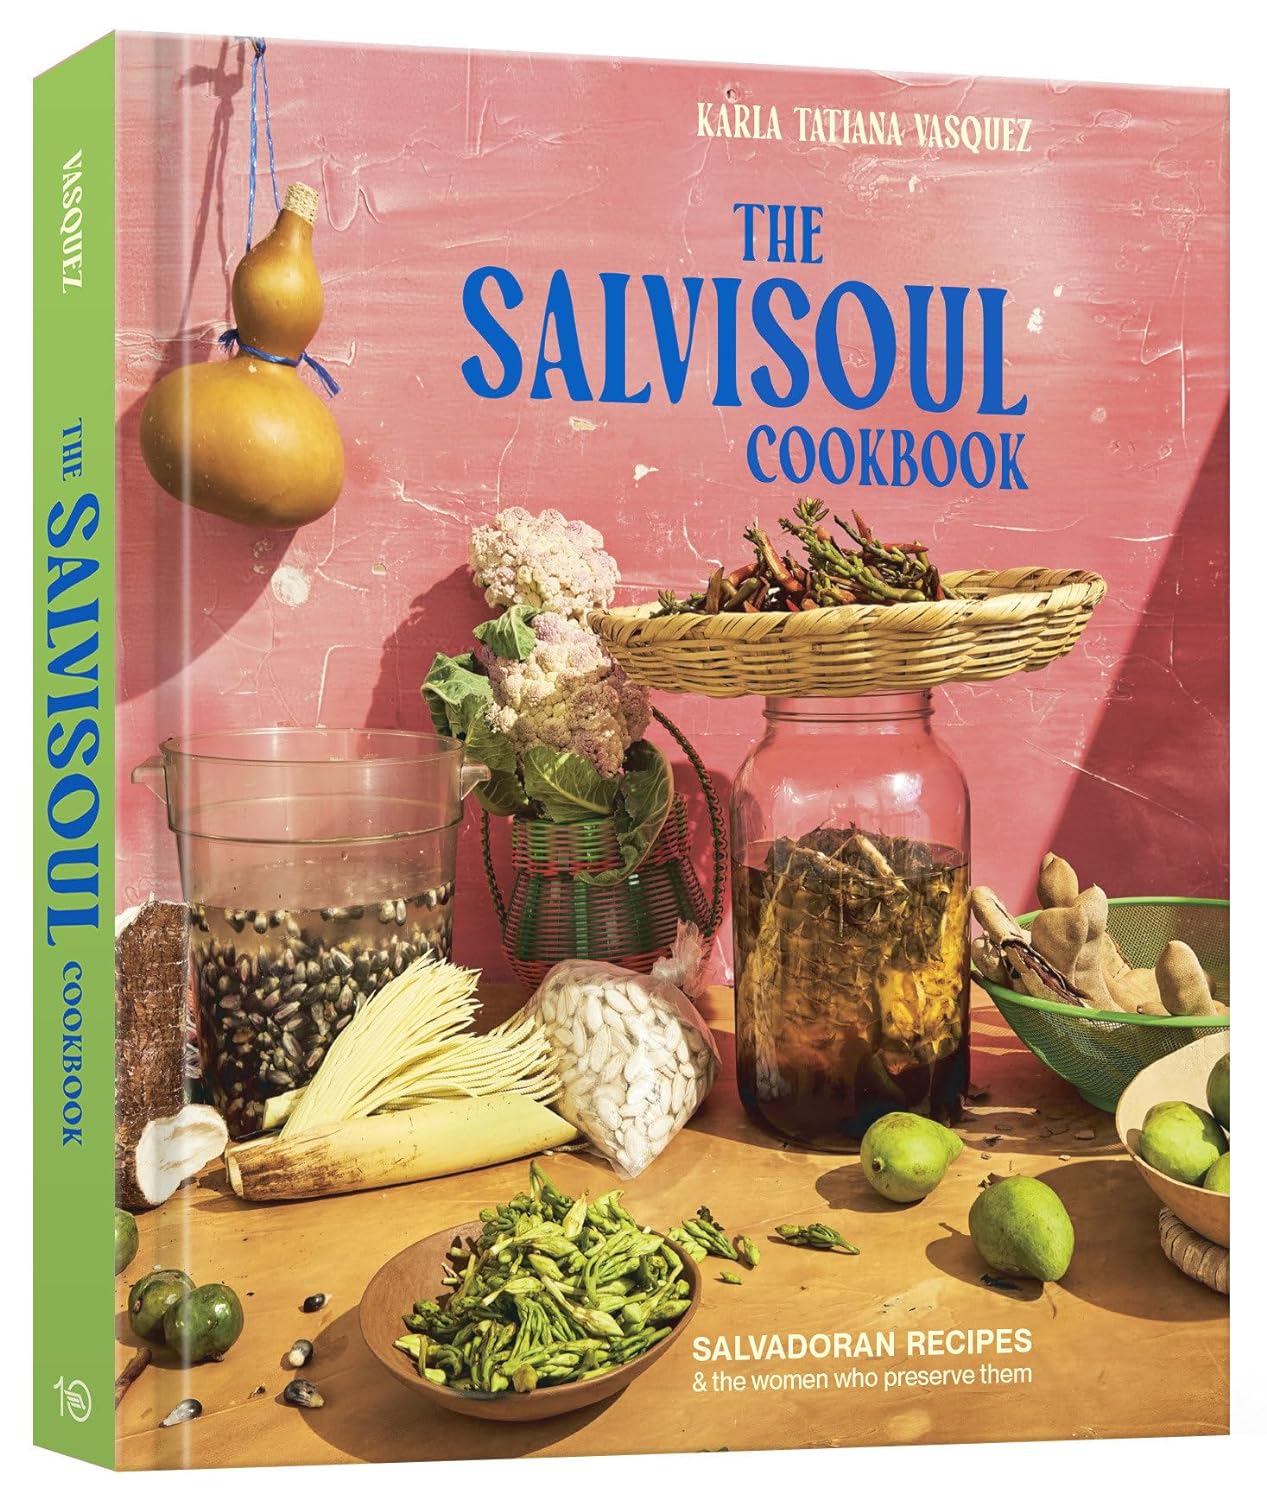 The SalviSoul Cookbook: Salvadoran Recipes and the Women Who Preserve Them (Karla Tatiana Vasquez) *Signed*